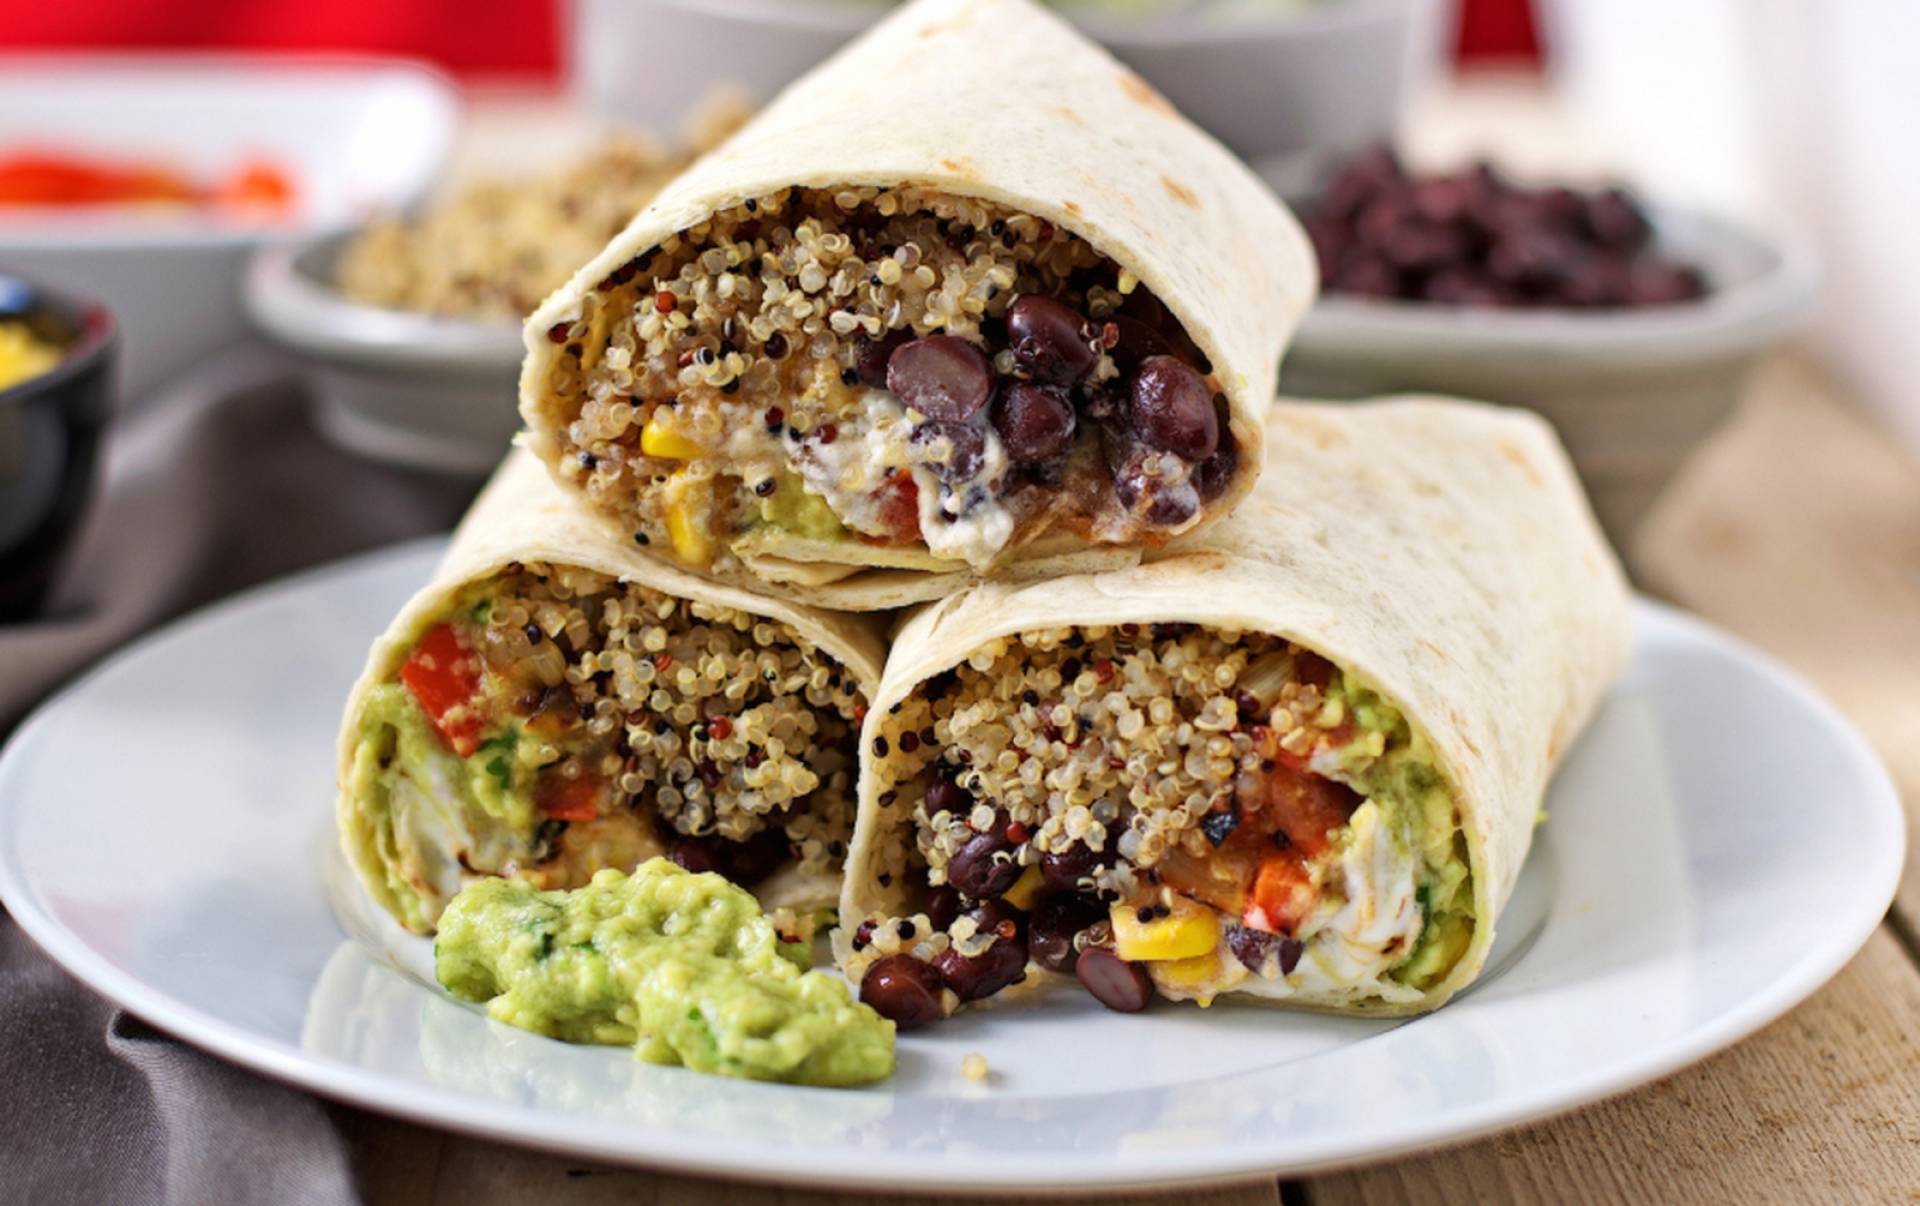 Mexi quinoa wrap (vegan)